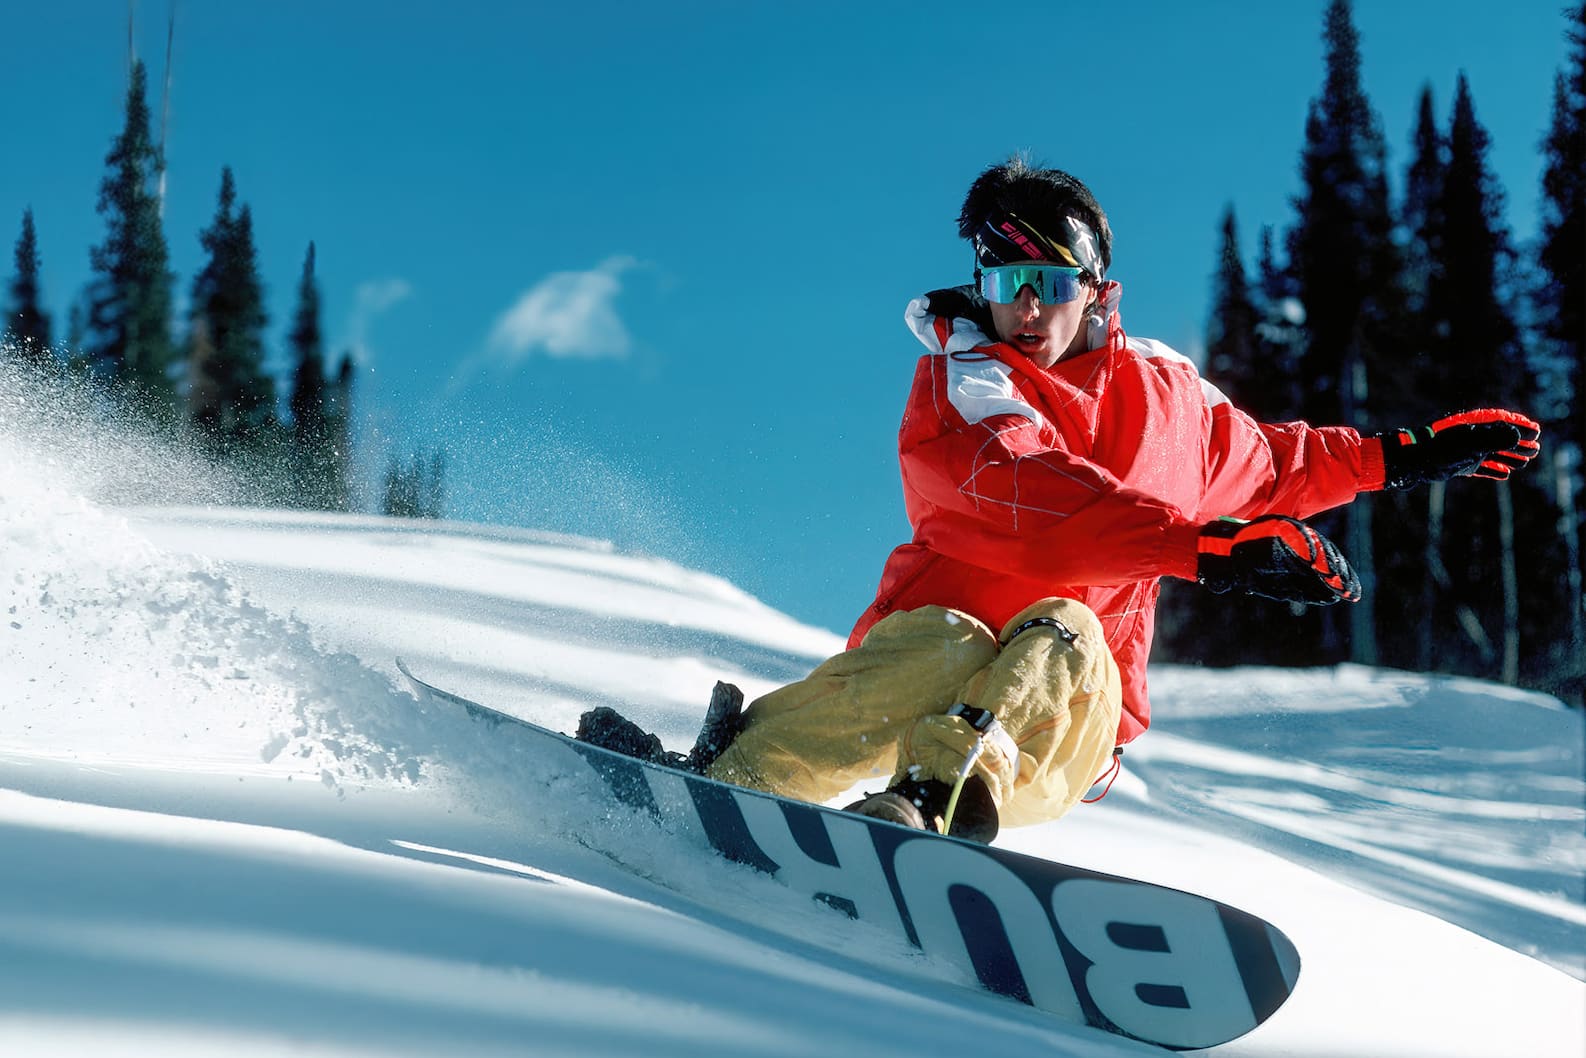 How to Price a Vintage Burton Snowboard | Burton Snowboards